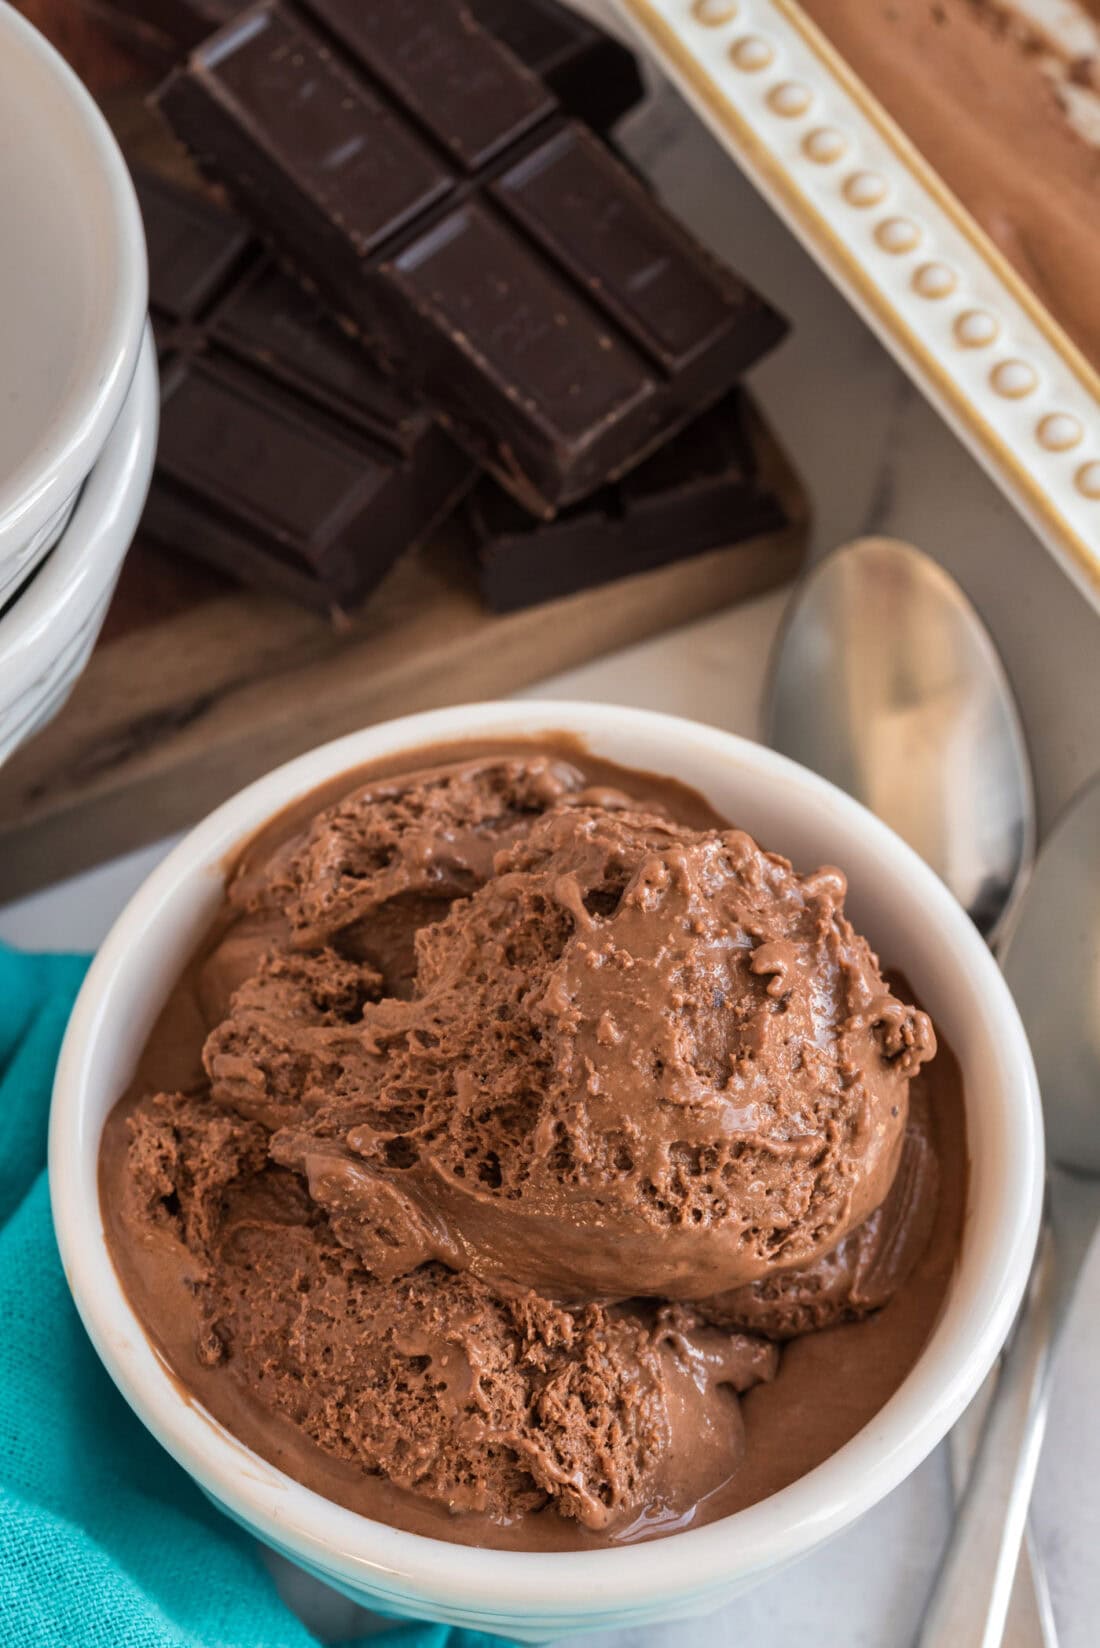 Bowl of Homemade Chocolate Ice Cream